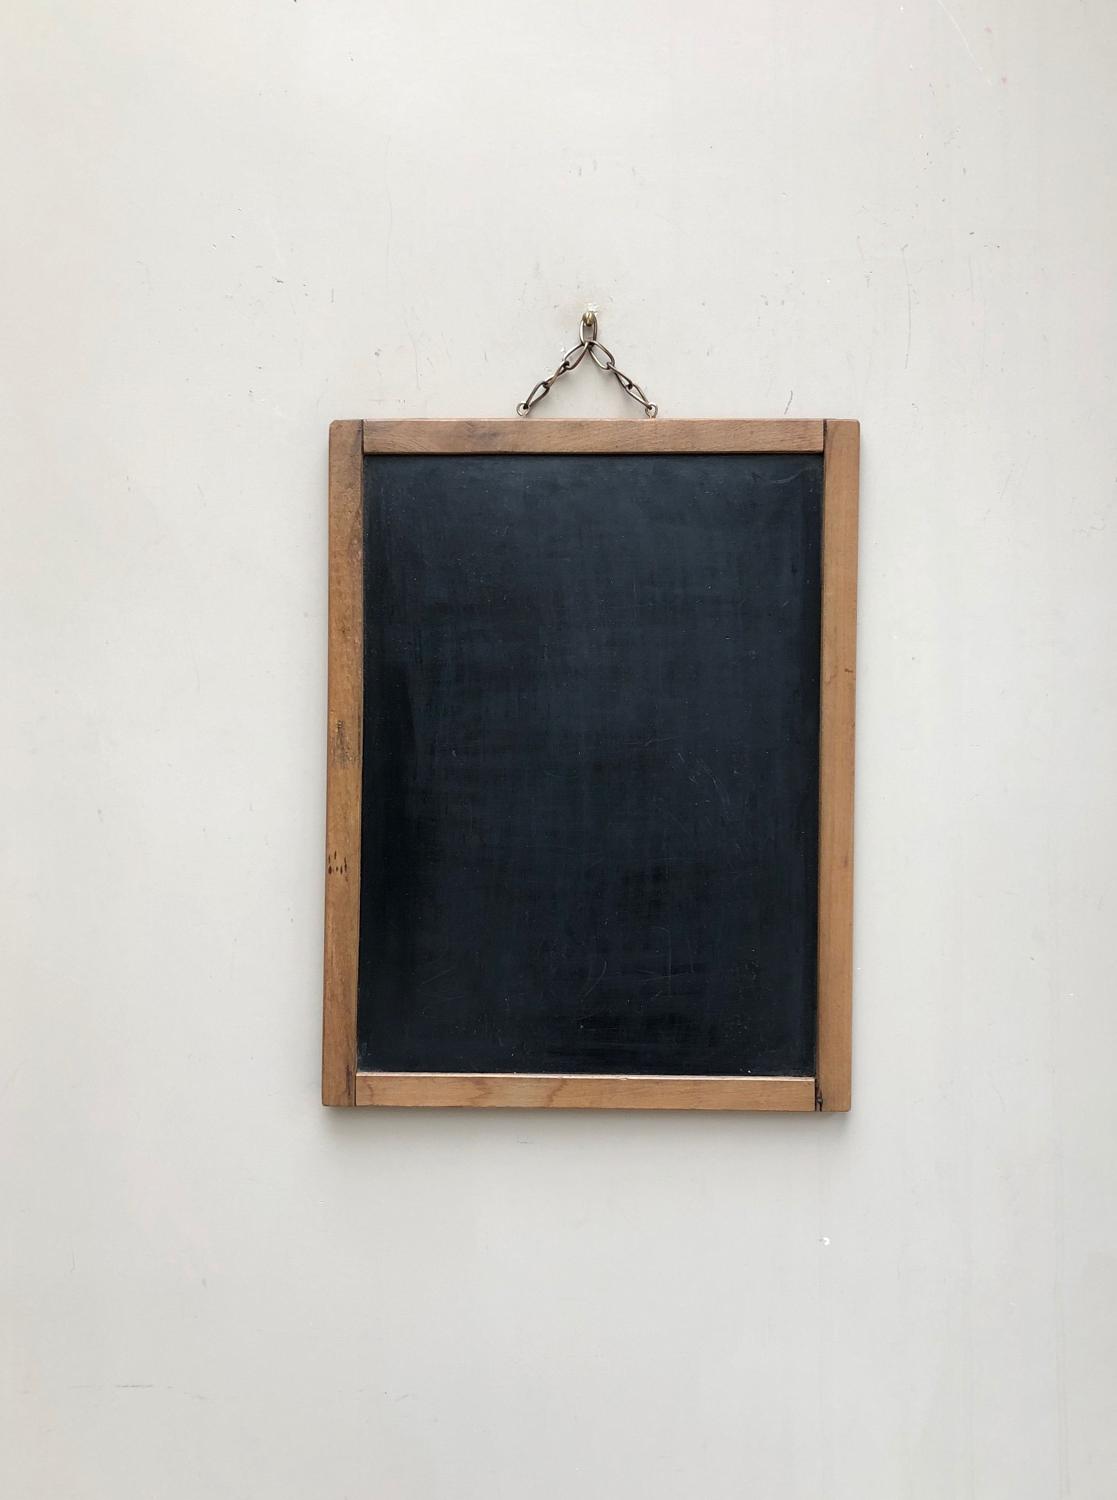 C.1940s Pine Framed Blackboard- Good Large Size for Kitchen Memo Board